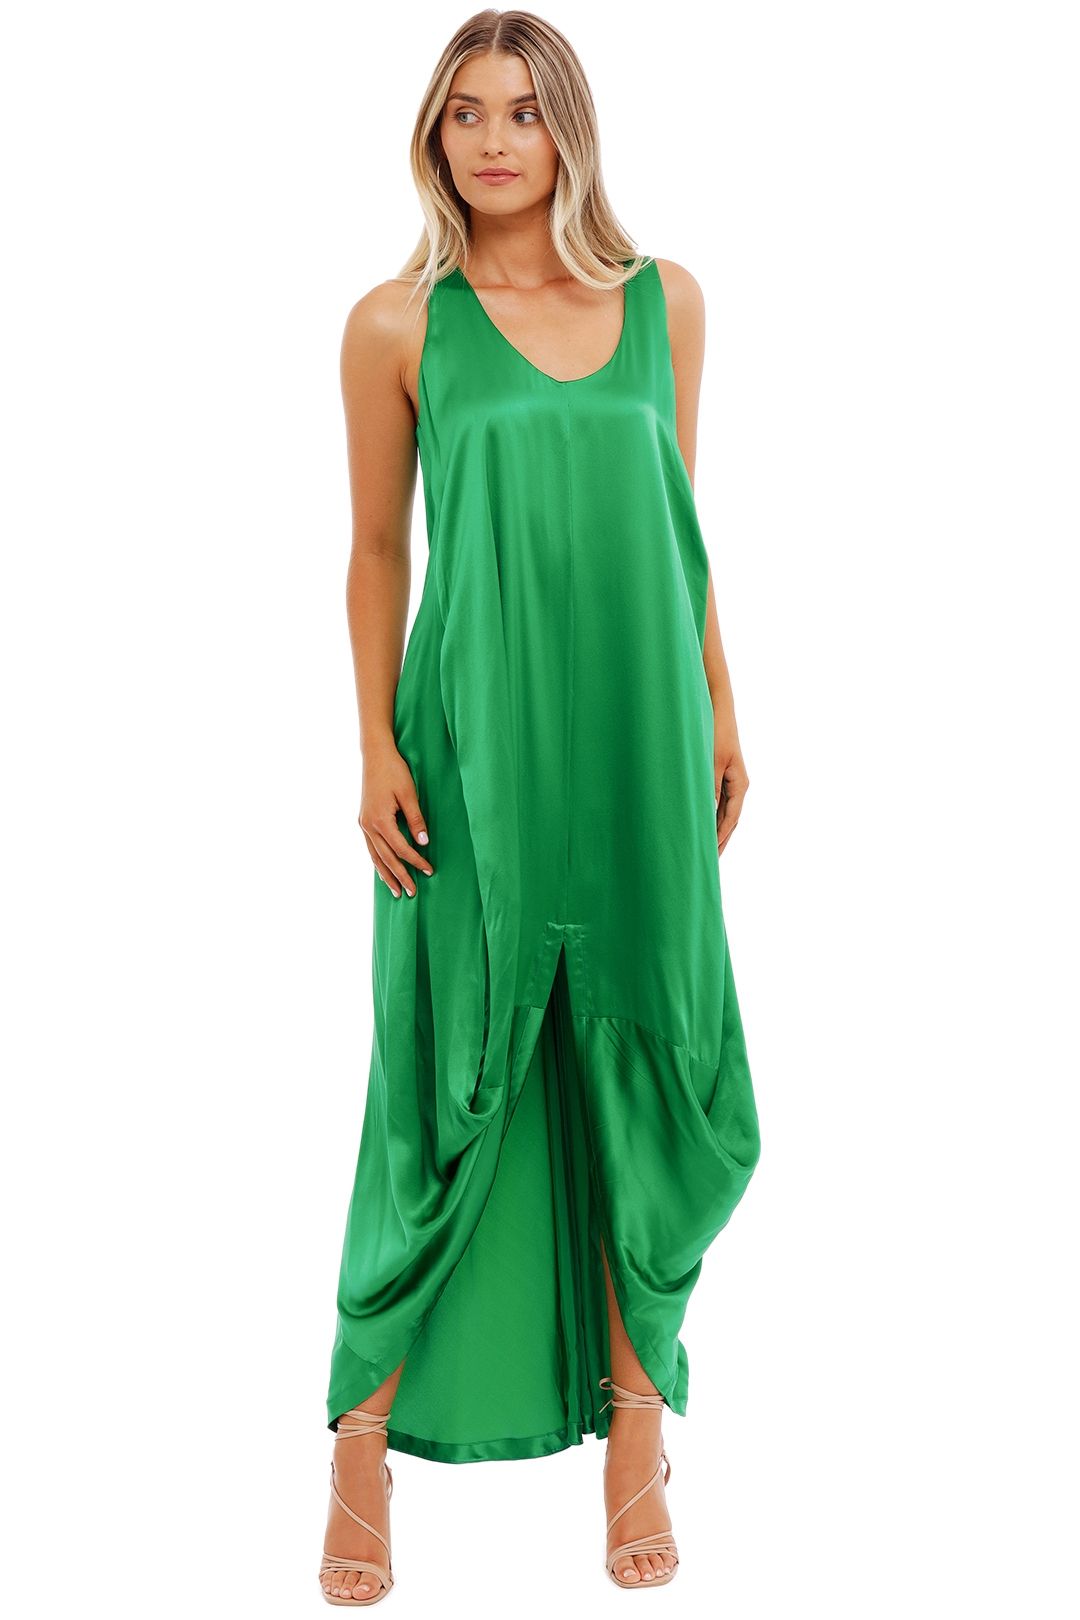 KITX Float Dress Green drape